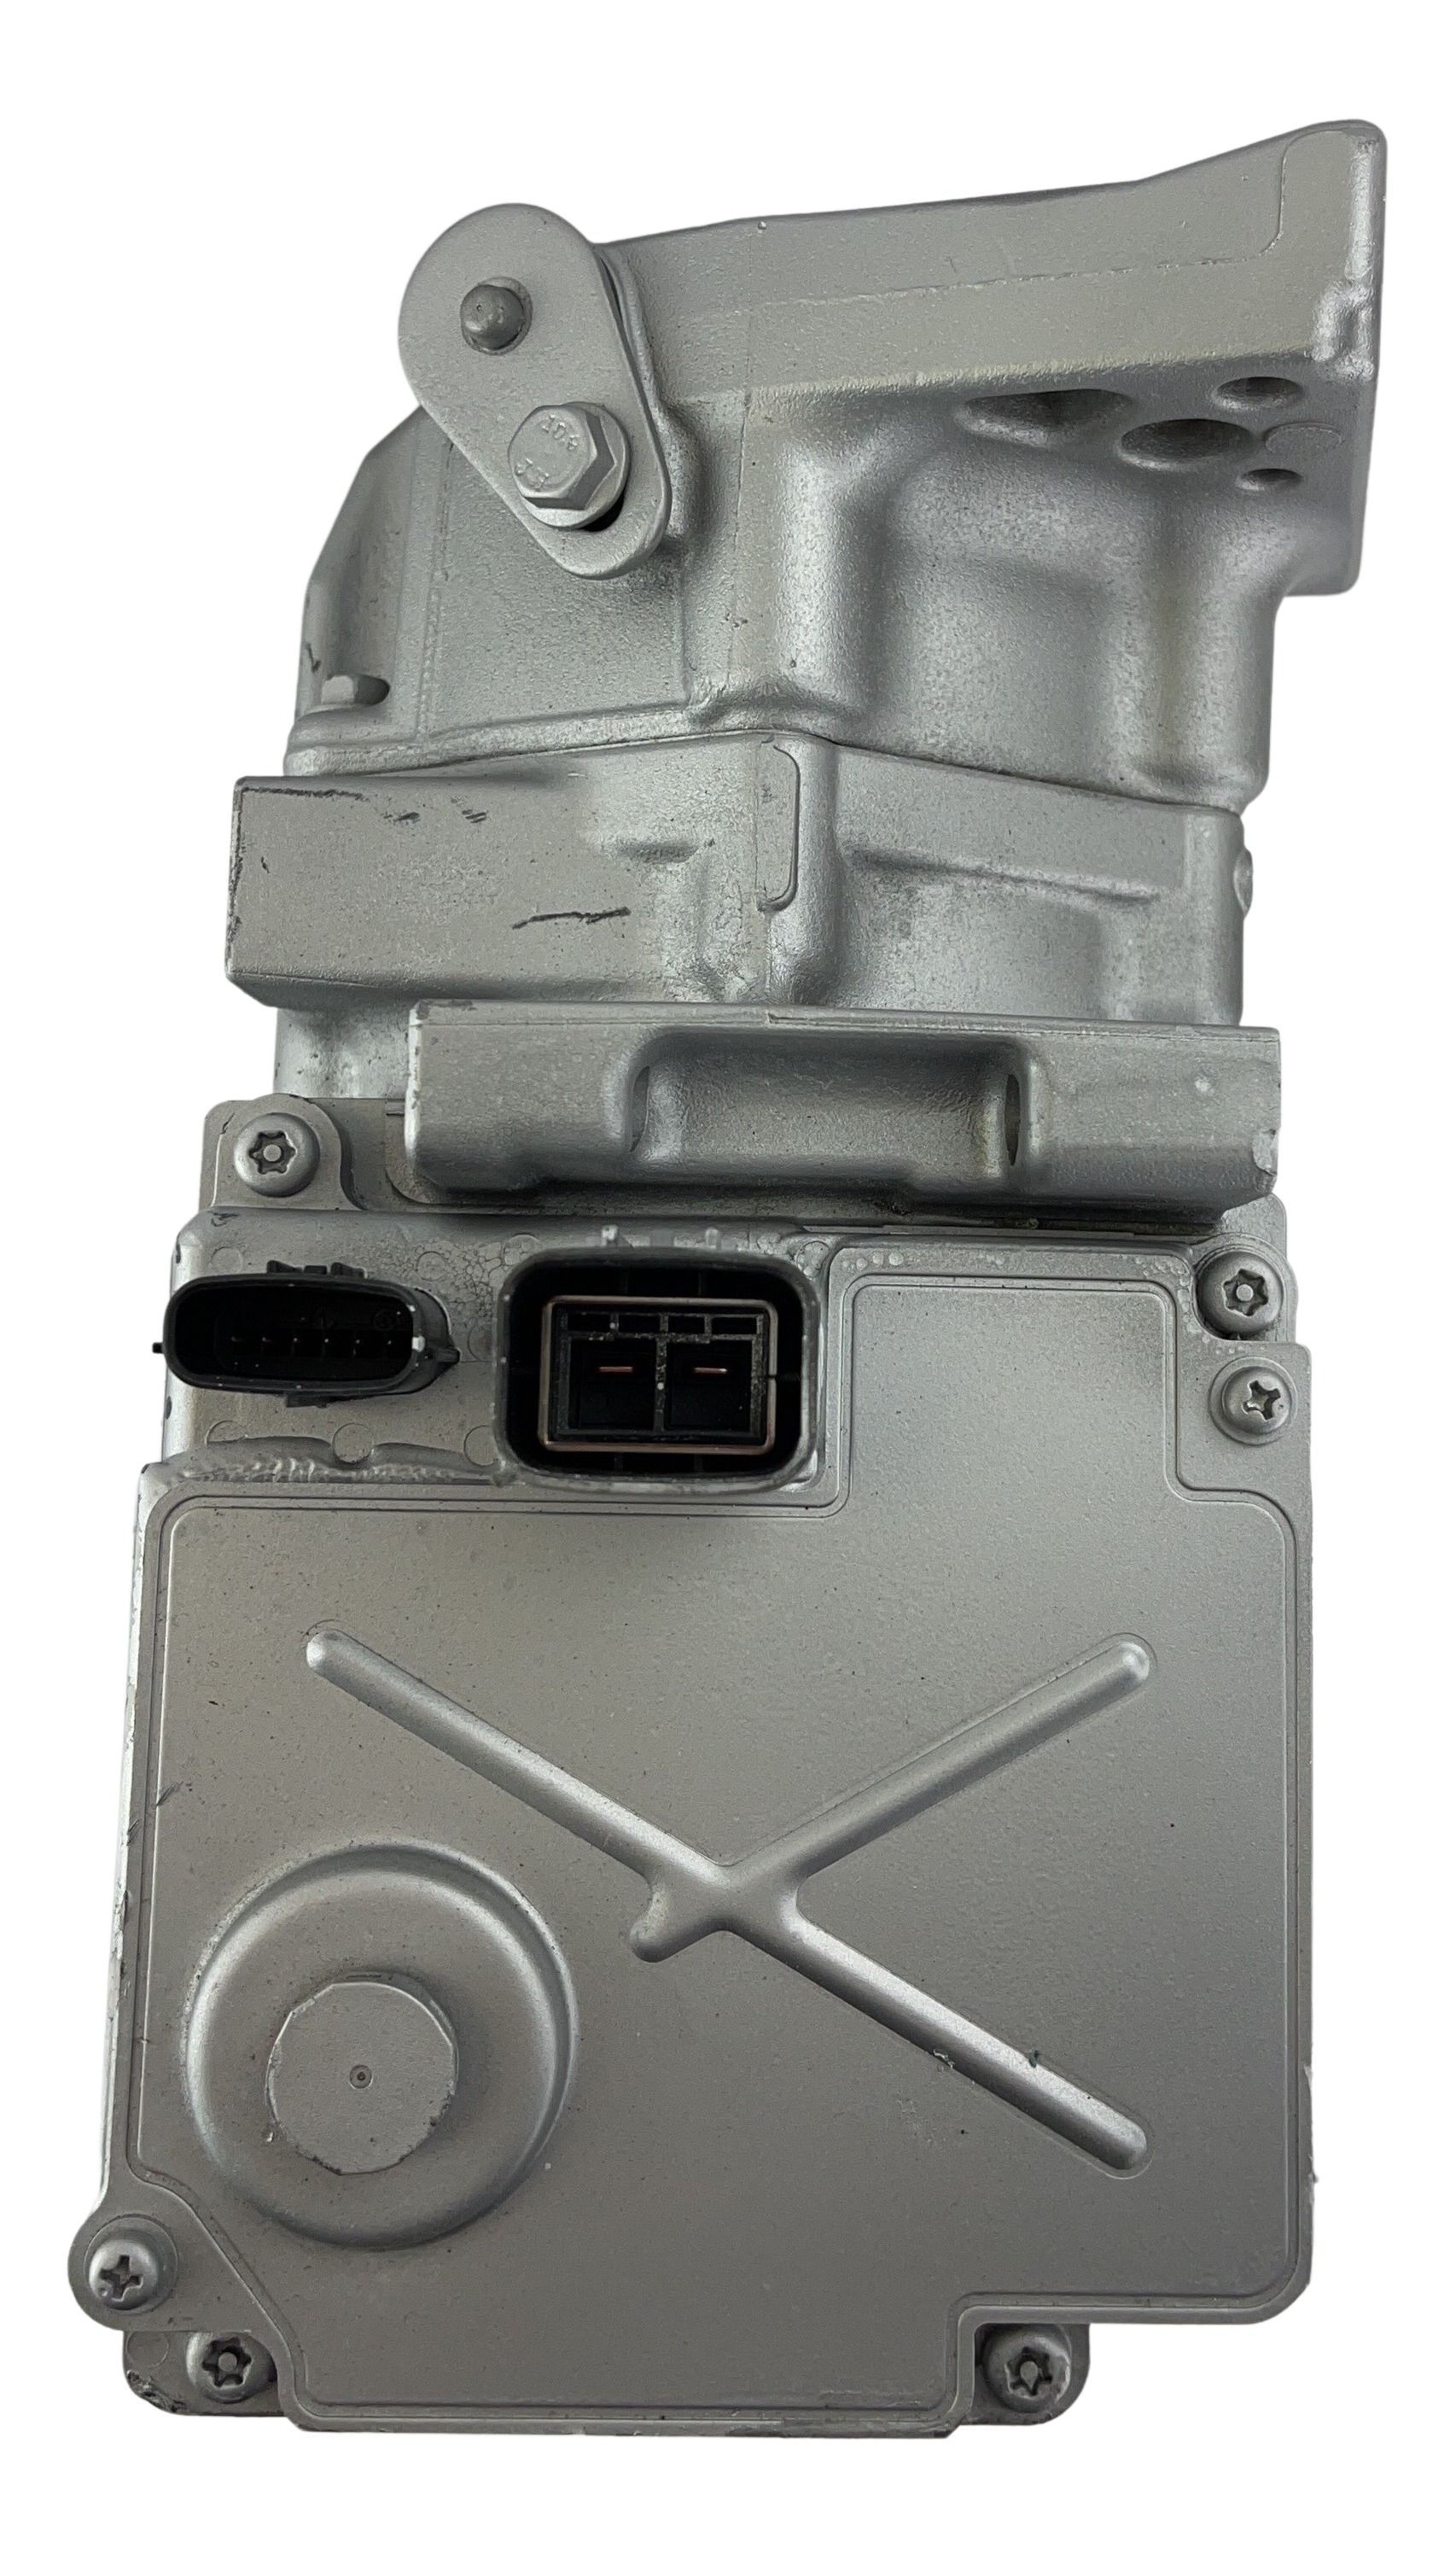 TCW Platinum Compressor 33008.000OEM New Product Image field_60b6a13a6e67c